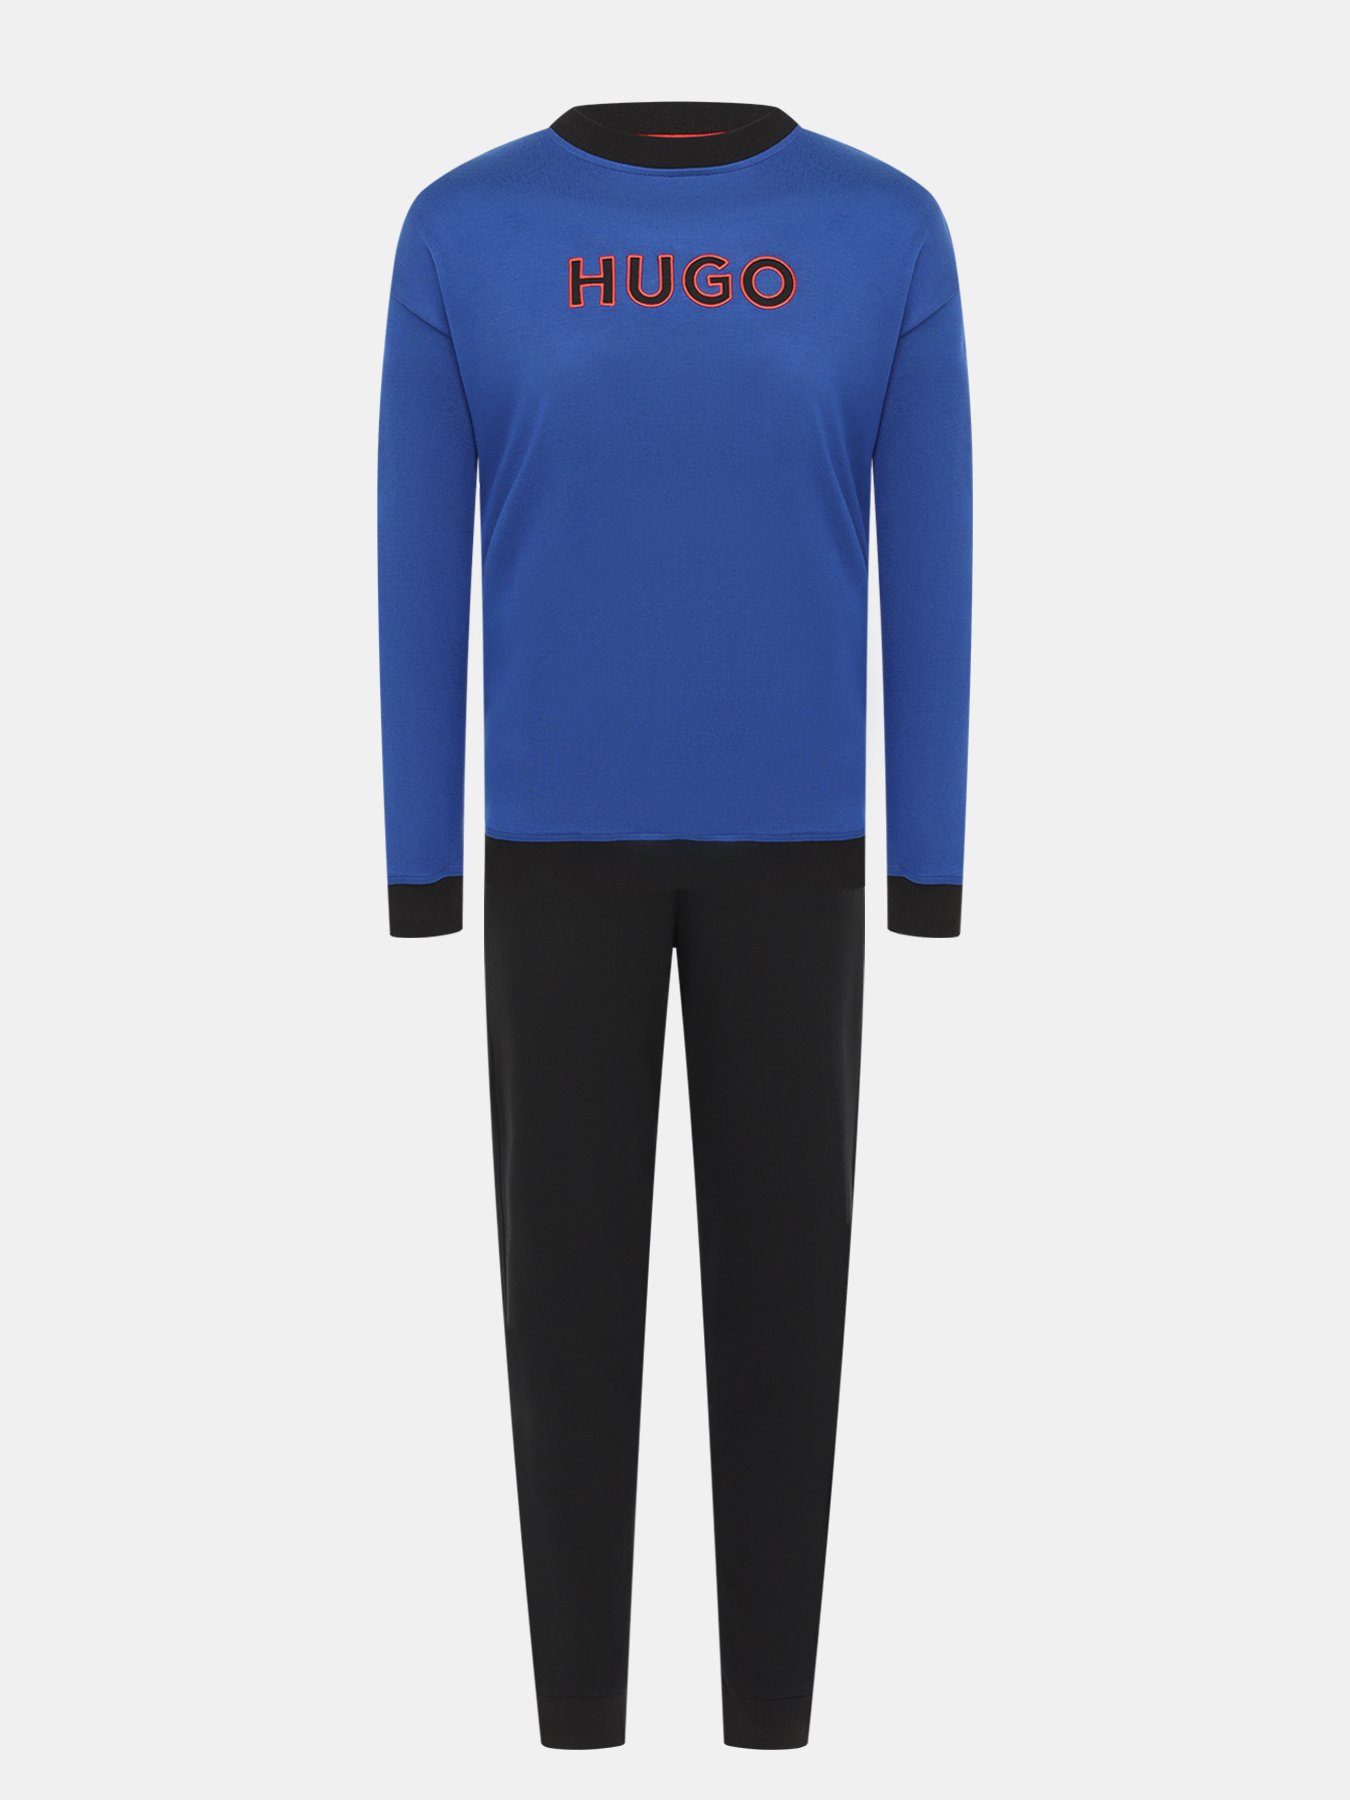 Пижама Jaglion HUGO 438641-044, цвет синий, размер 50 - фото 1